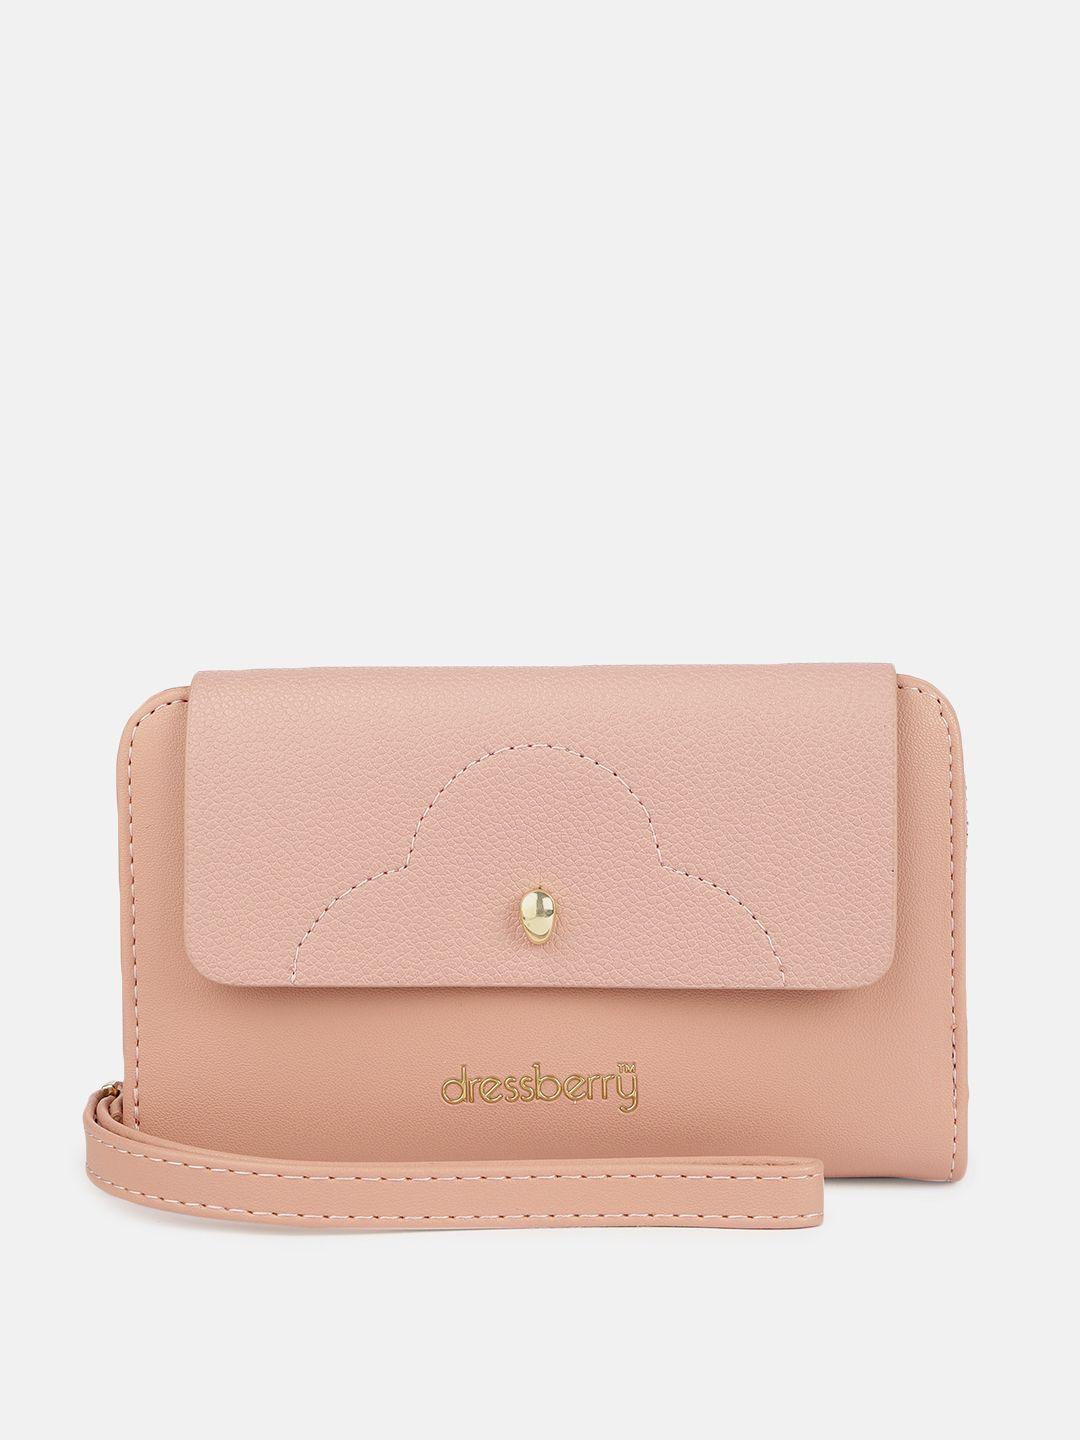 dressberry-women-pink-solid-zip-around-wallet